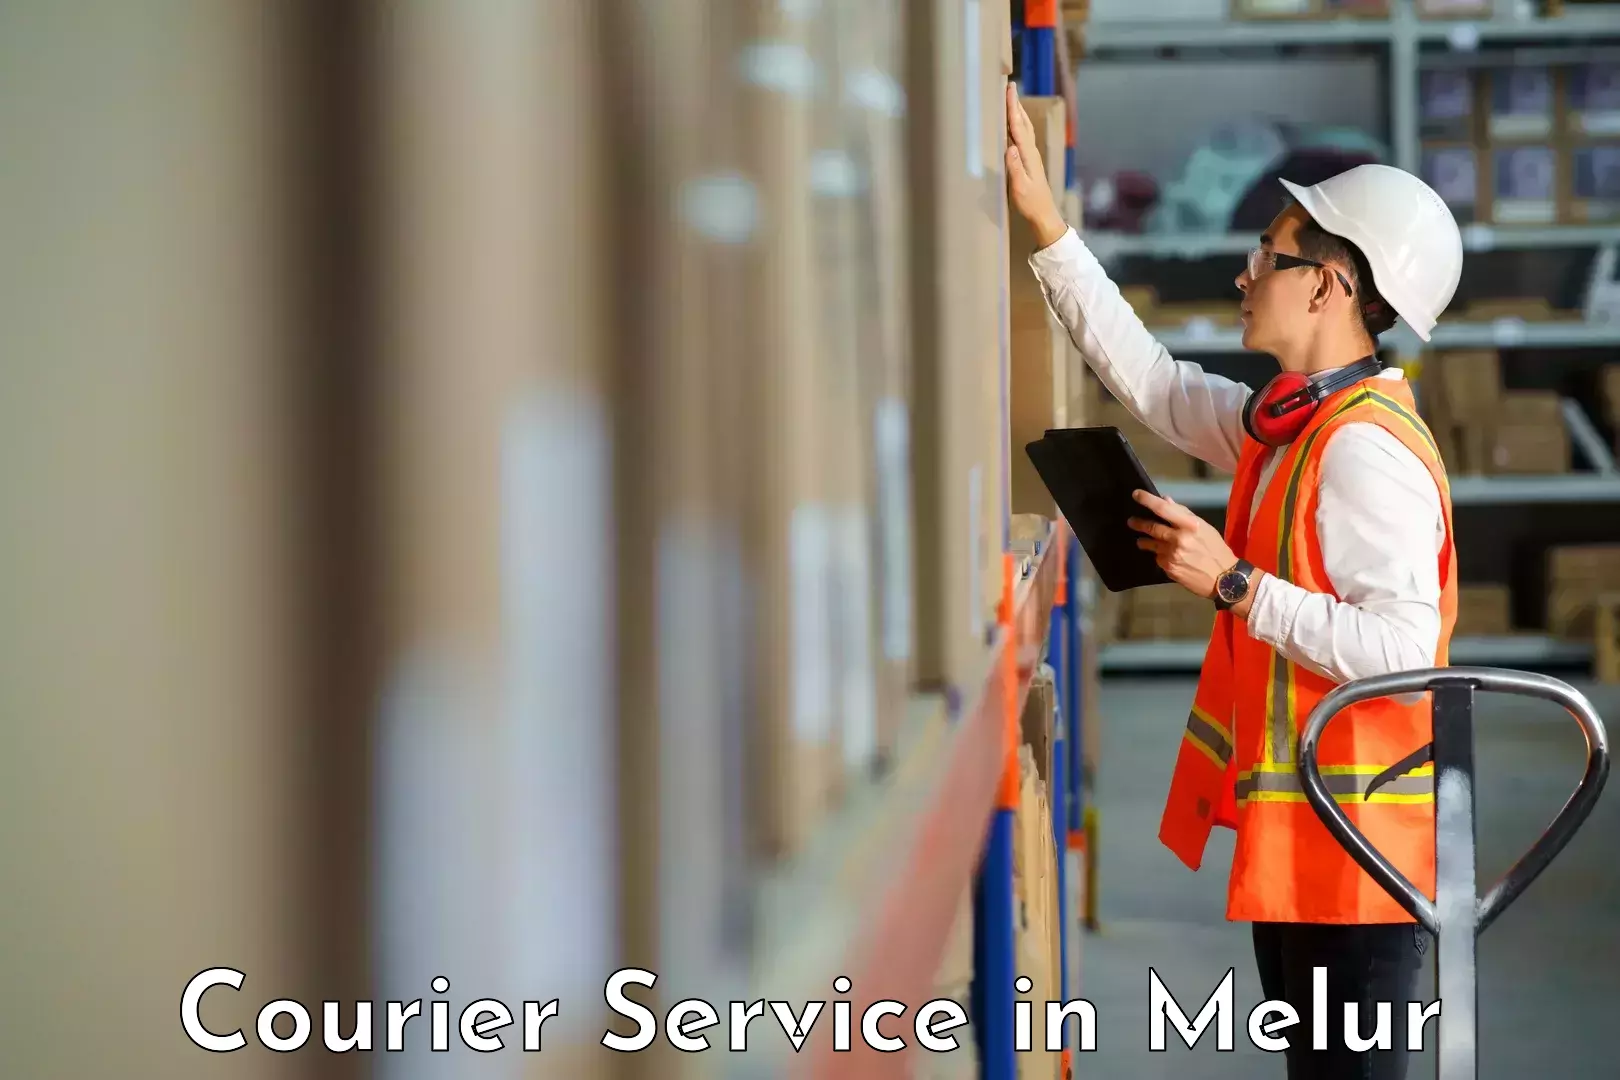 High-performance logistics in Melur